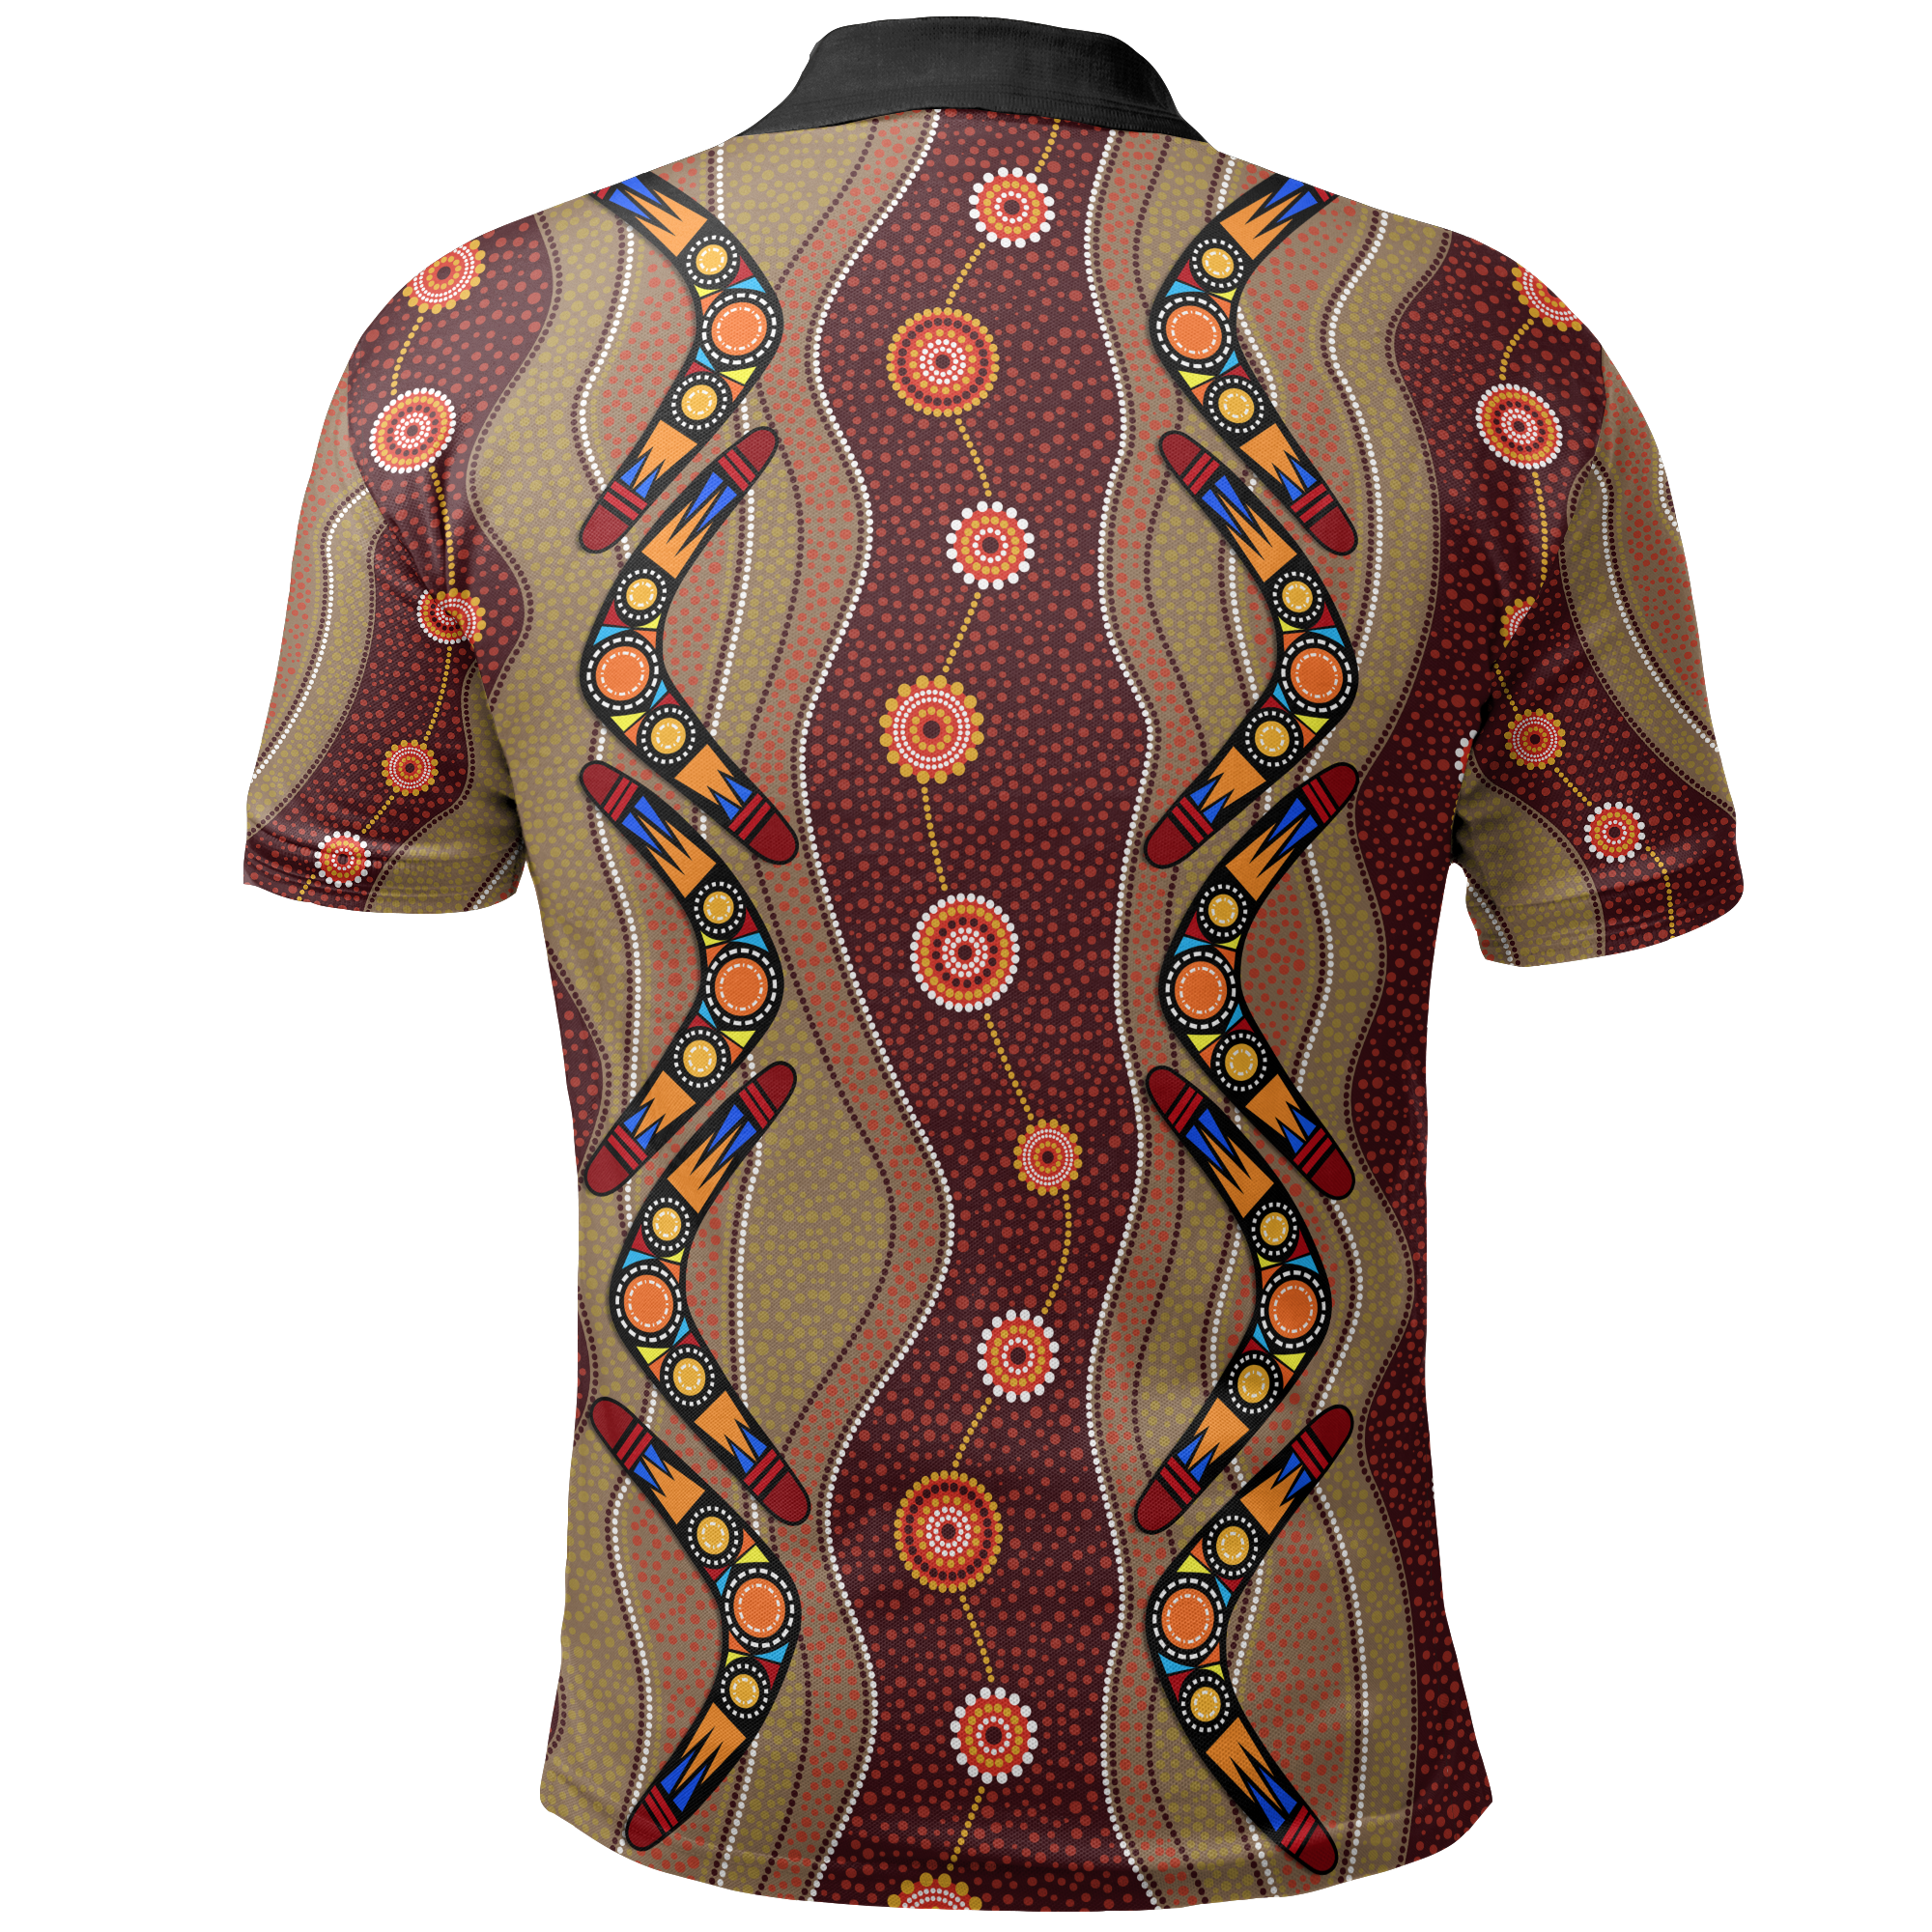 polo-shirt-aboriginal-dot-painting-shirt-boomerang-patterns-unisex